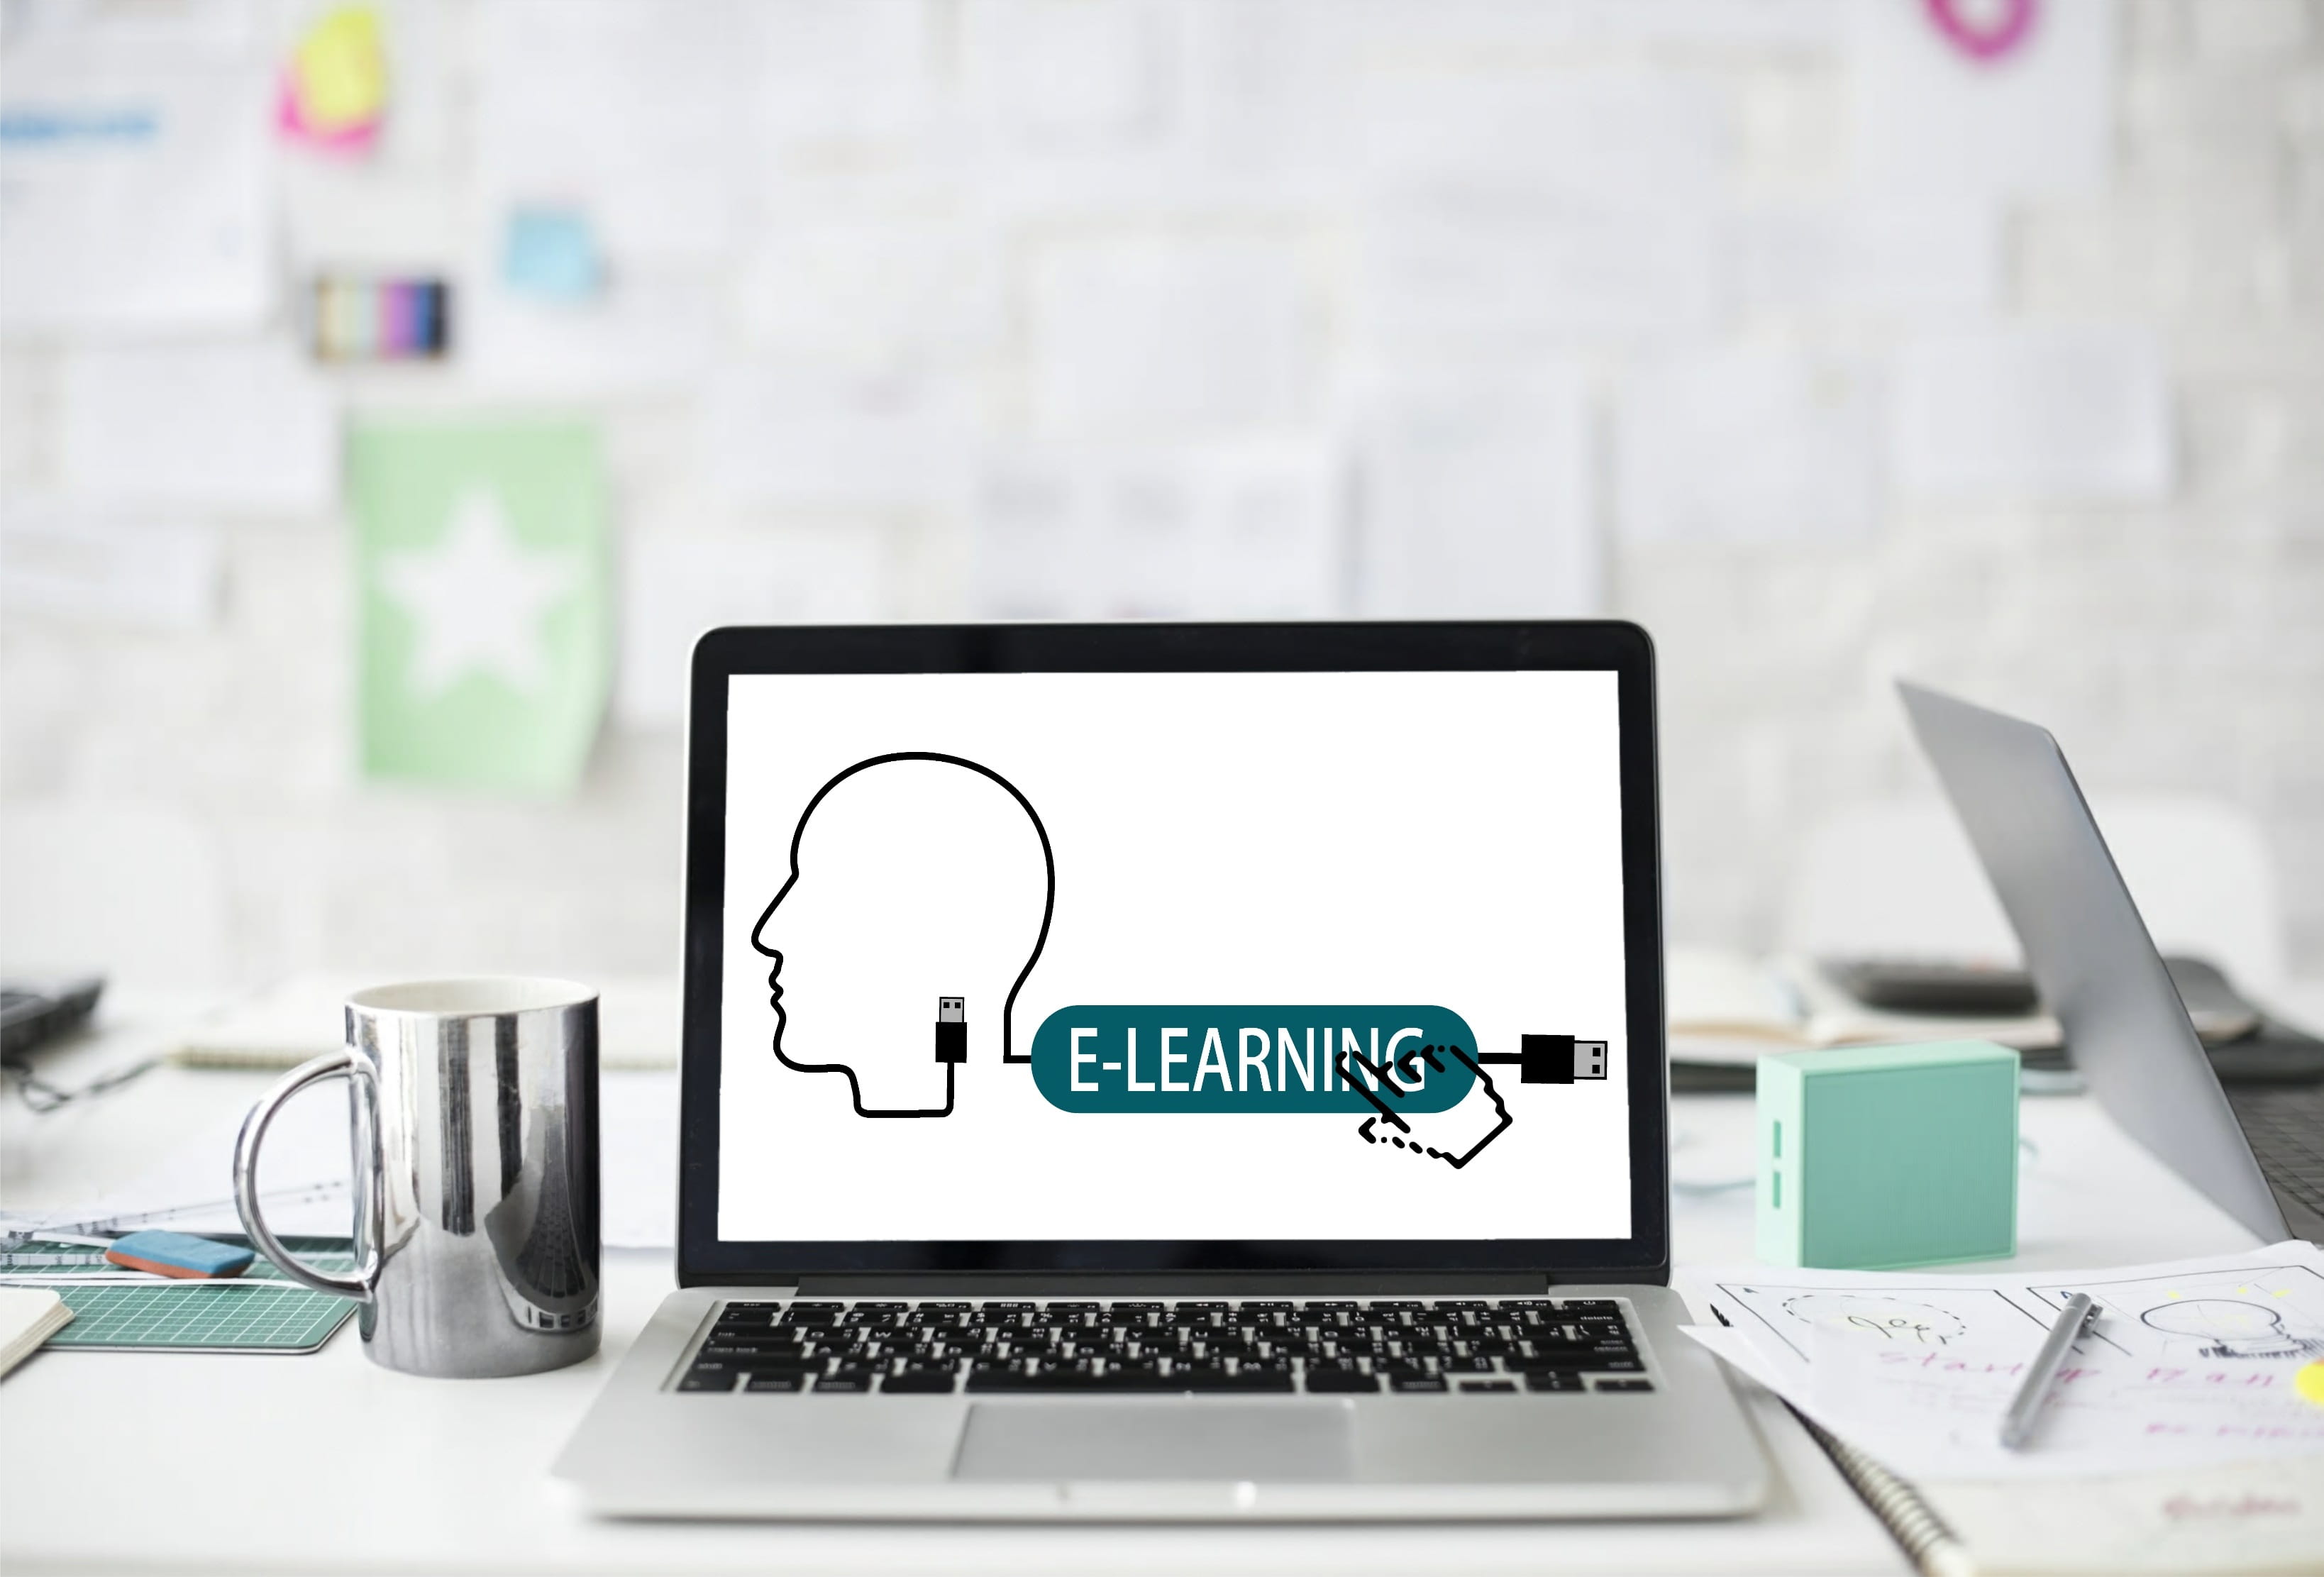 e-learning, training, school, online, knowledge, education